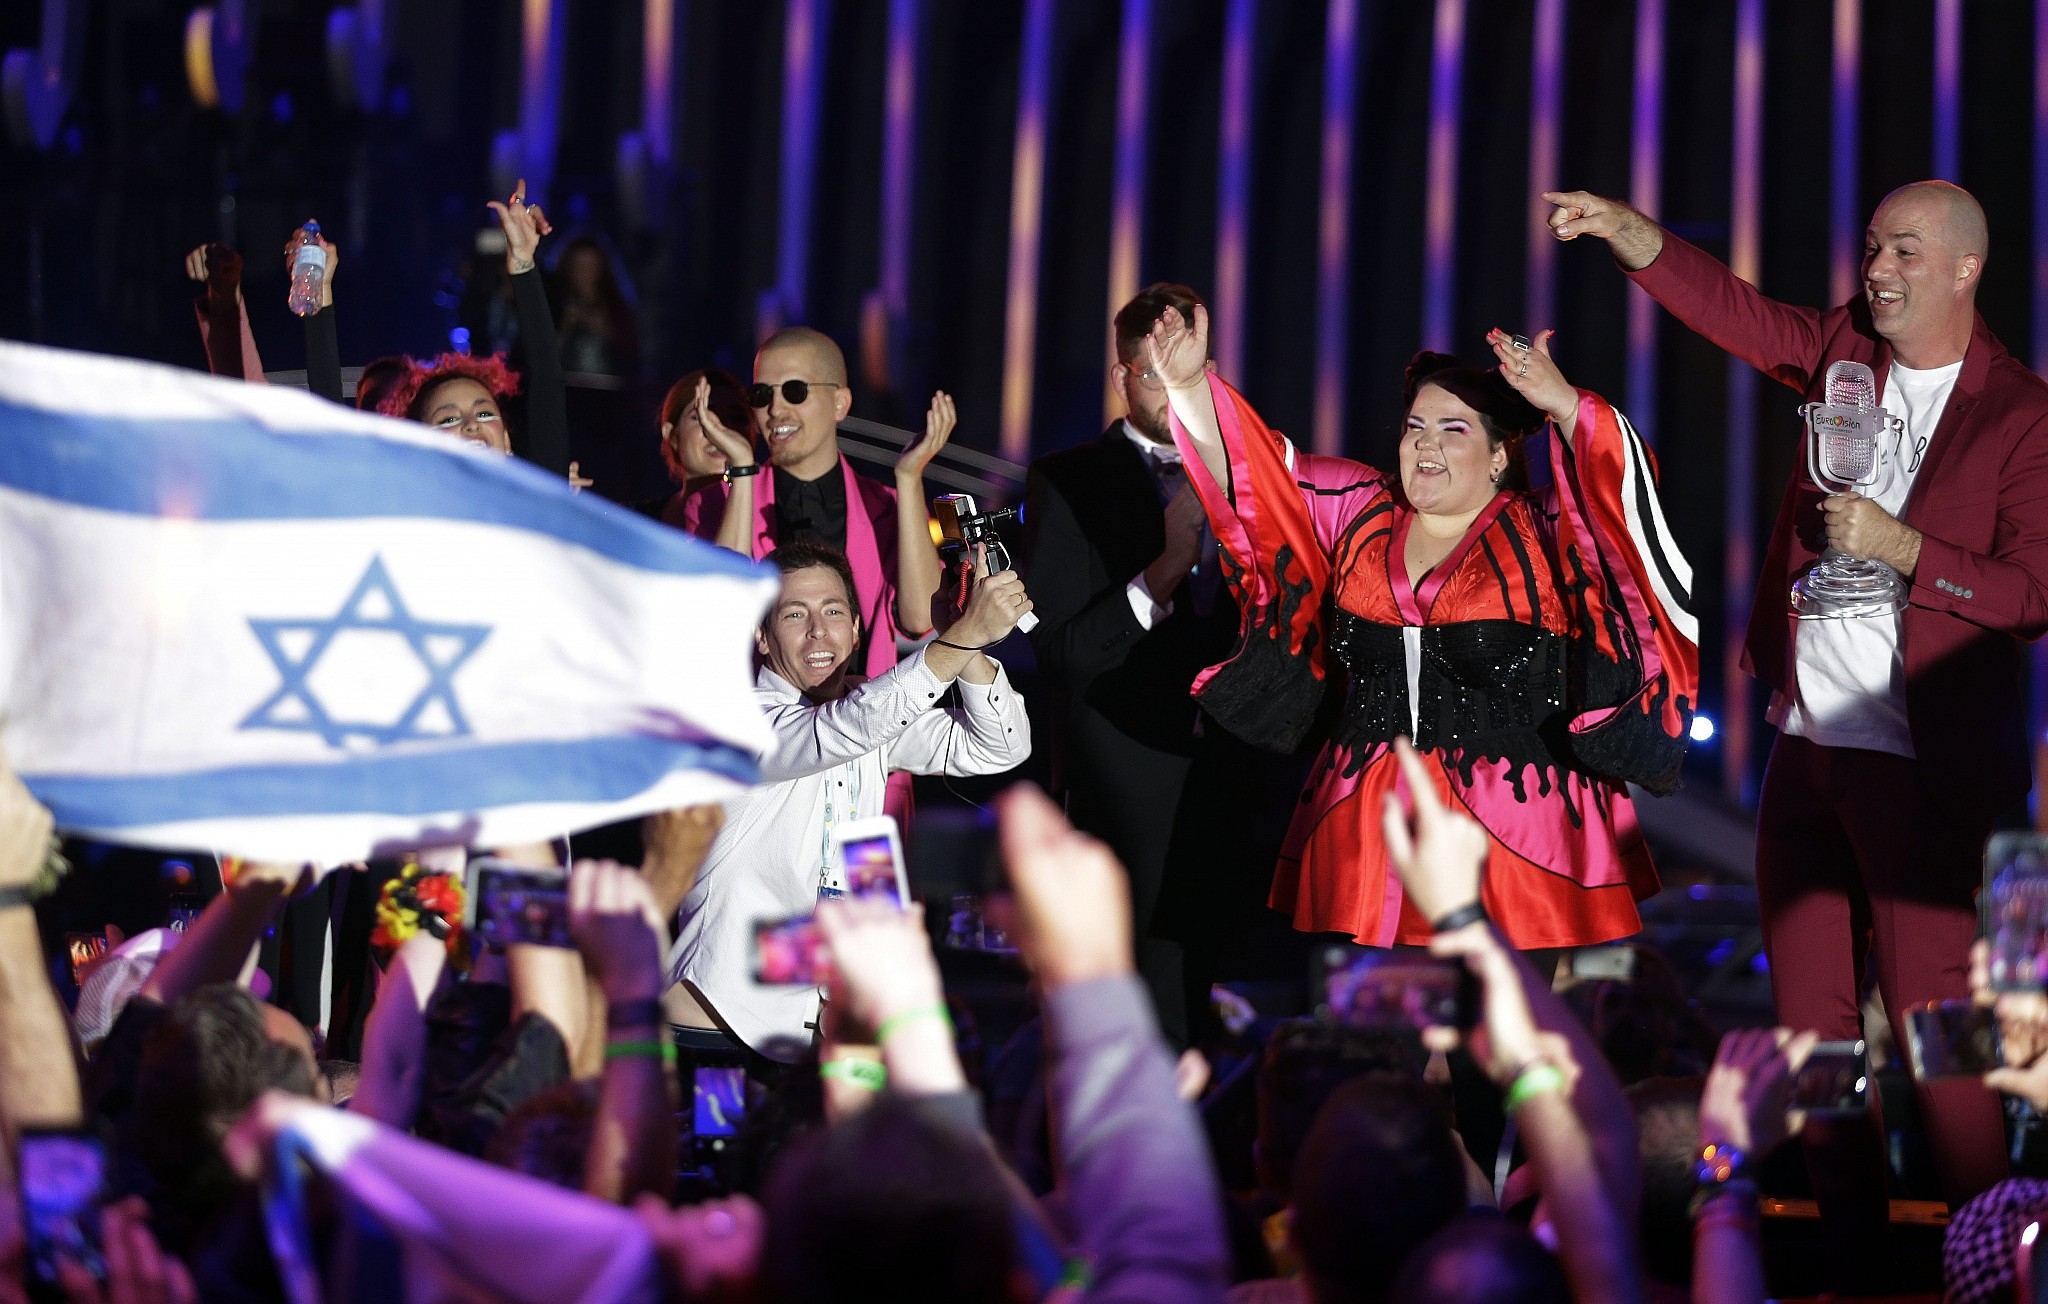 Eurovision 2019: Είναι οριστικό! Στο Ισραήλ ο επόμενος διαγωνισμός